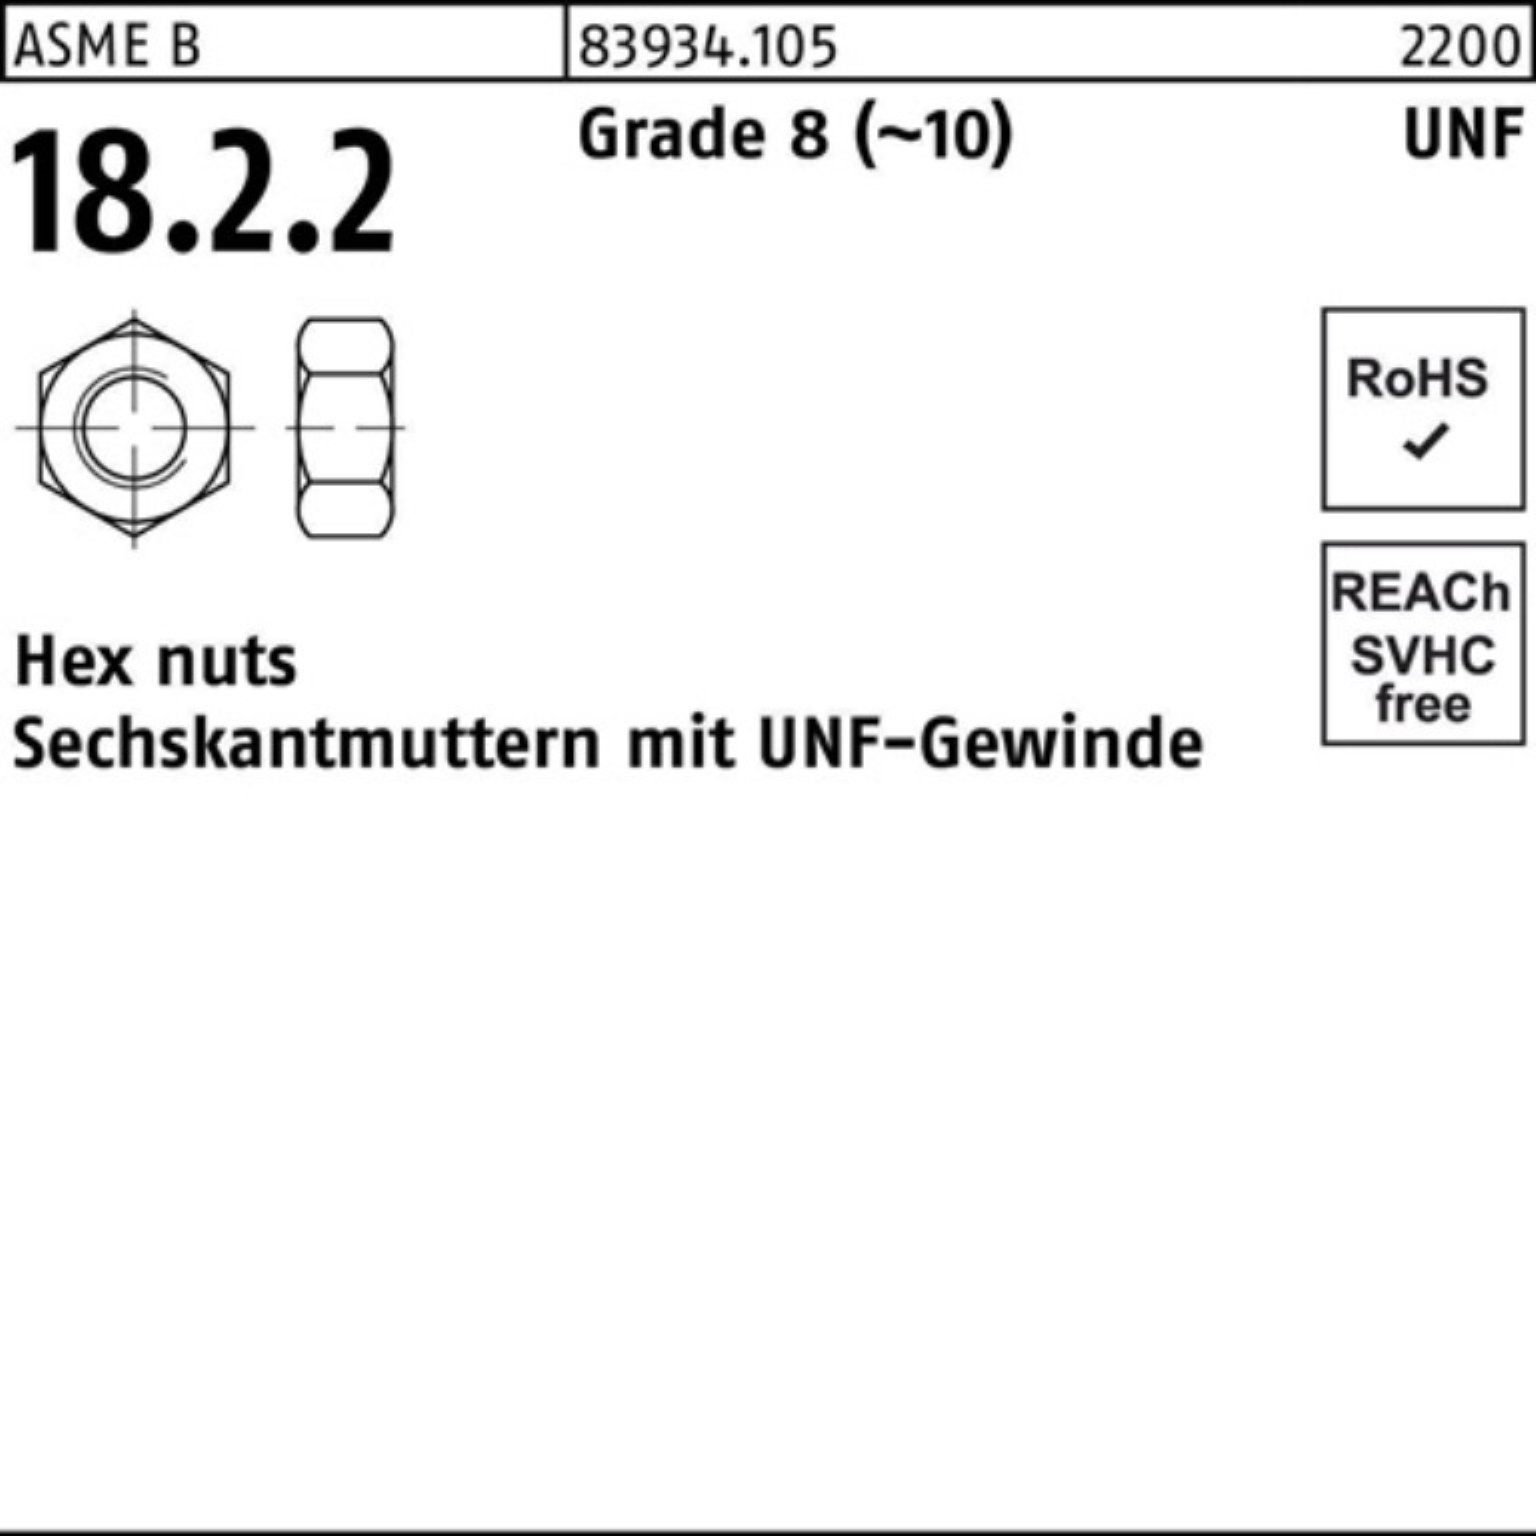 Reyher Muttern 1/4 R Pack 100er Sechskantmutter UNF-Gewinde 83934 8 Grade (10) 10 1